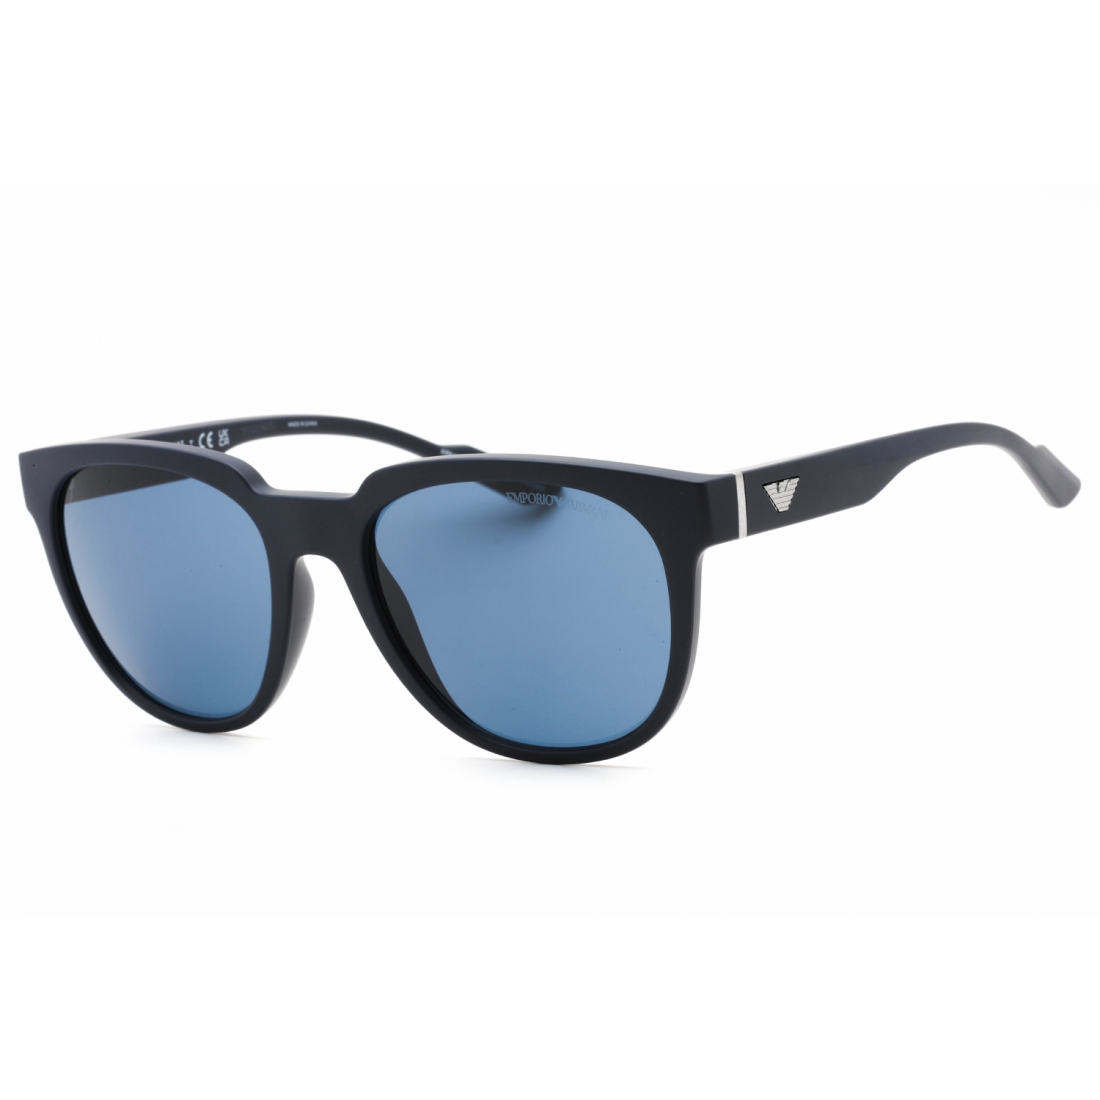 Men's '0EA4205' Sunglasses